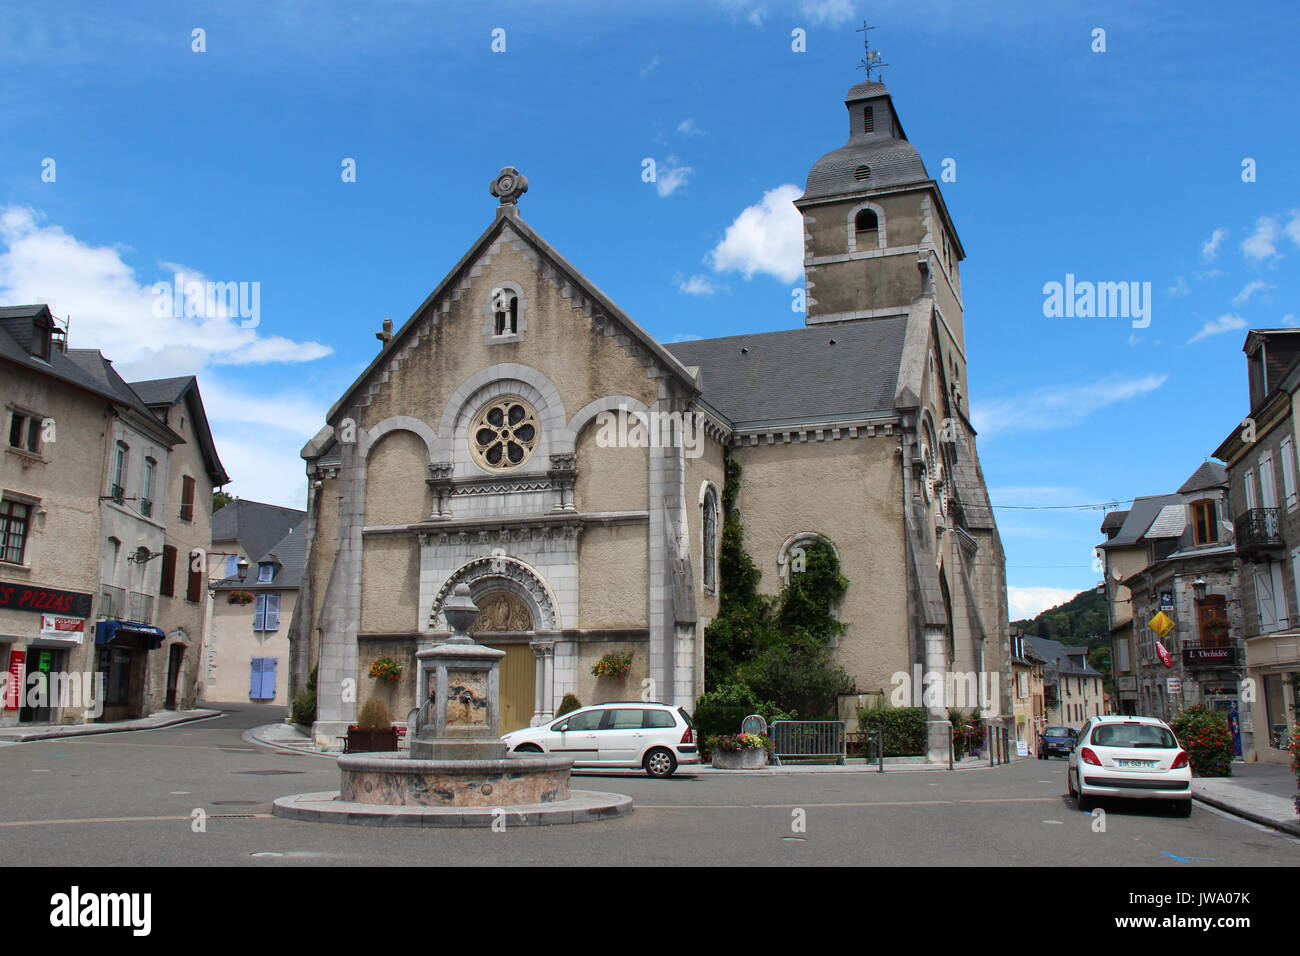 Saint-Germain church in Arudy (France). Stock Photo